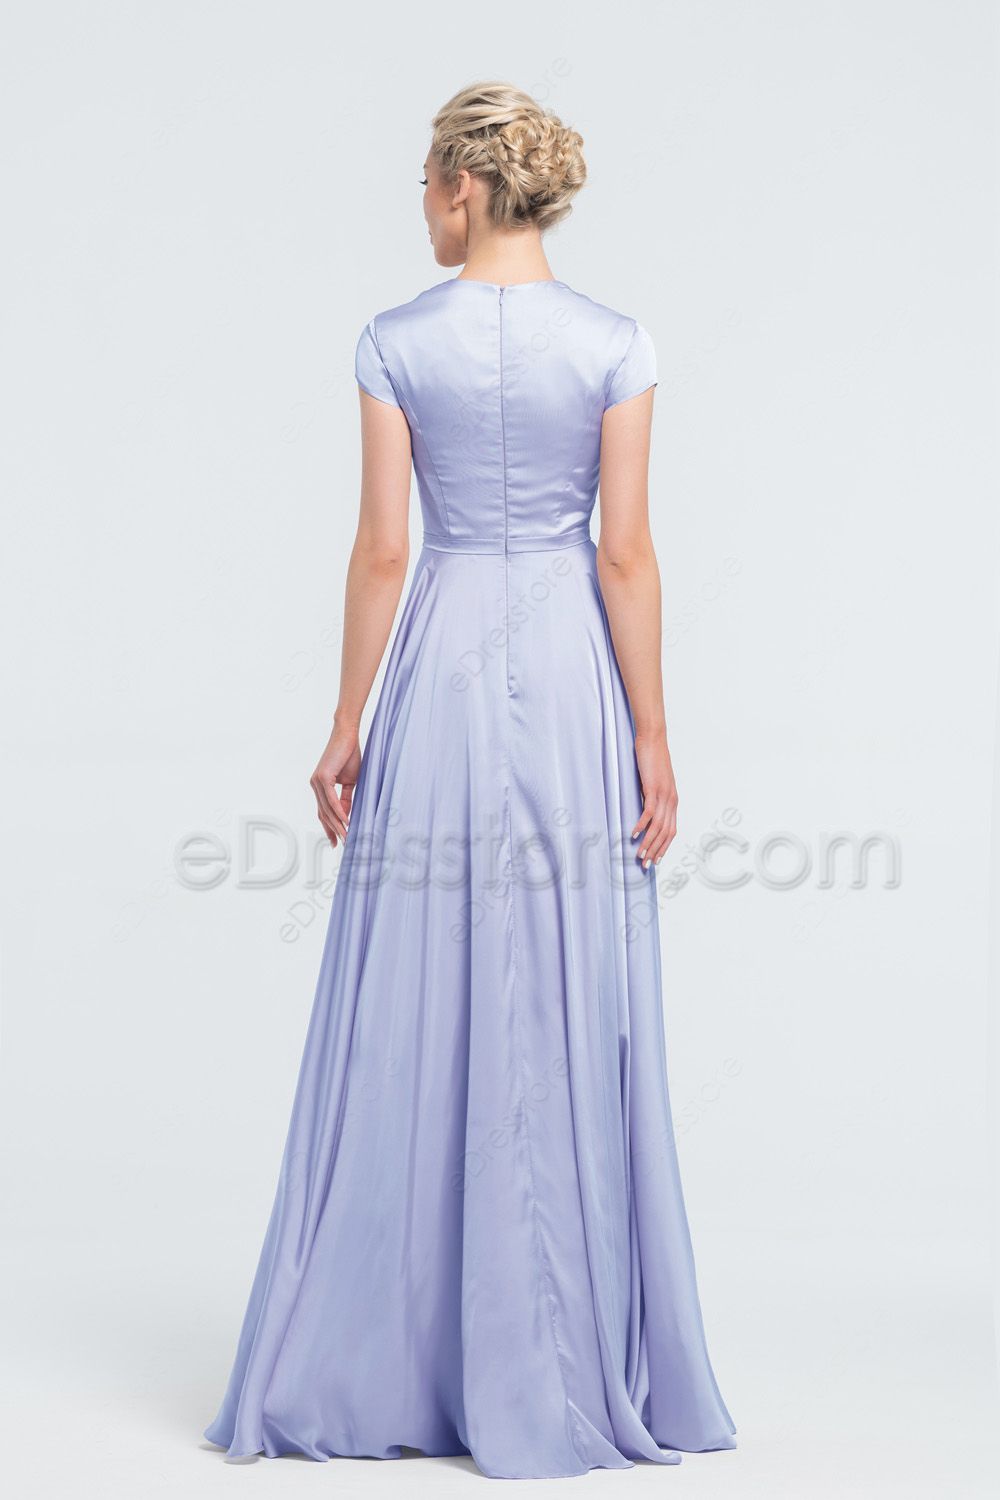 Modest Periwinkle Satin Bridesmaid Dresses | eDresstore